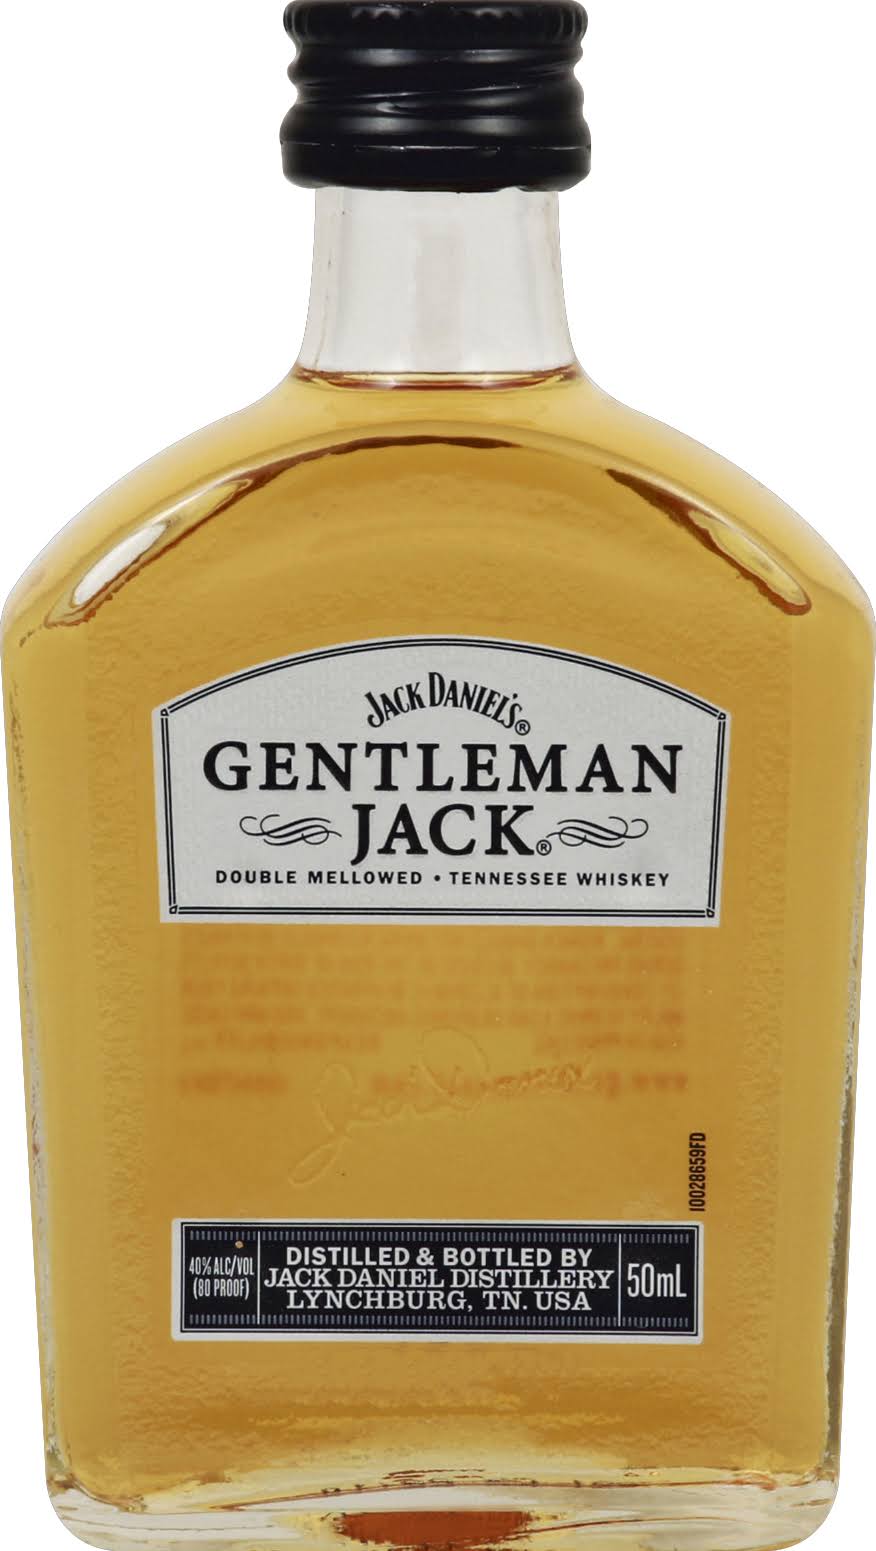 Jack Daniel's Gentleman Jack Tennessee Whiskey 50ml Bottle